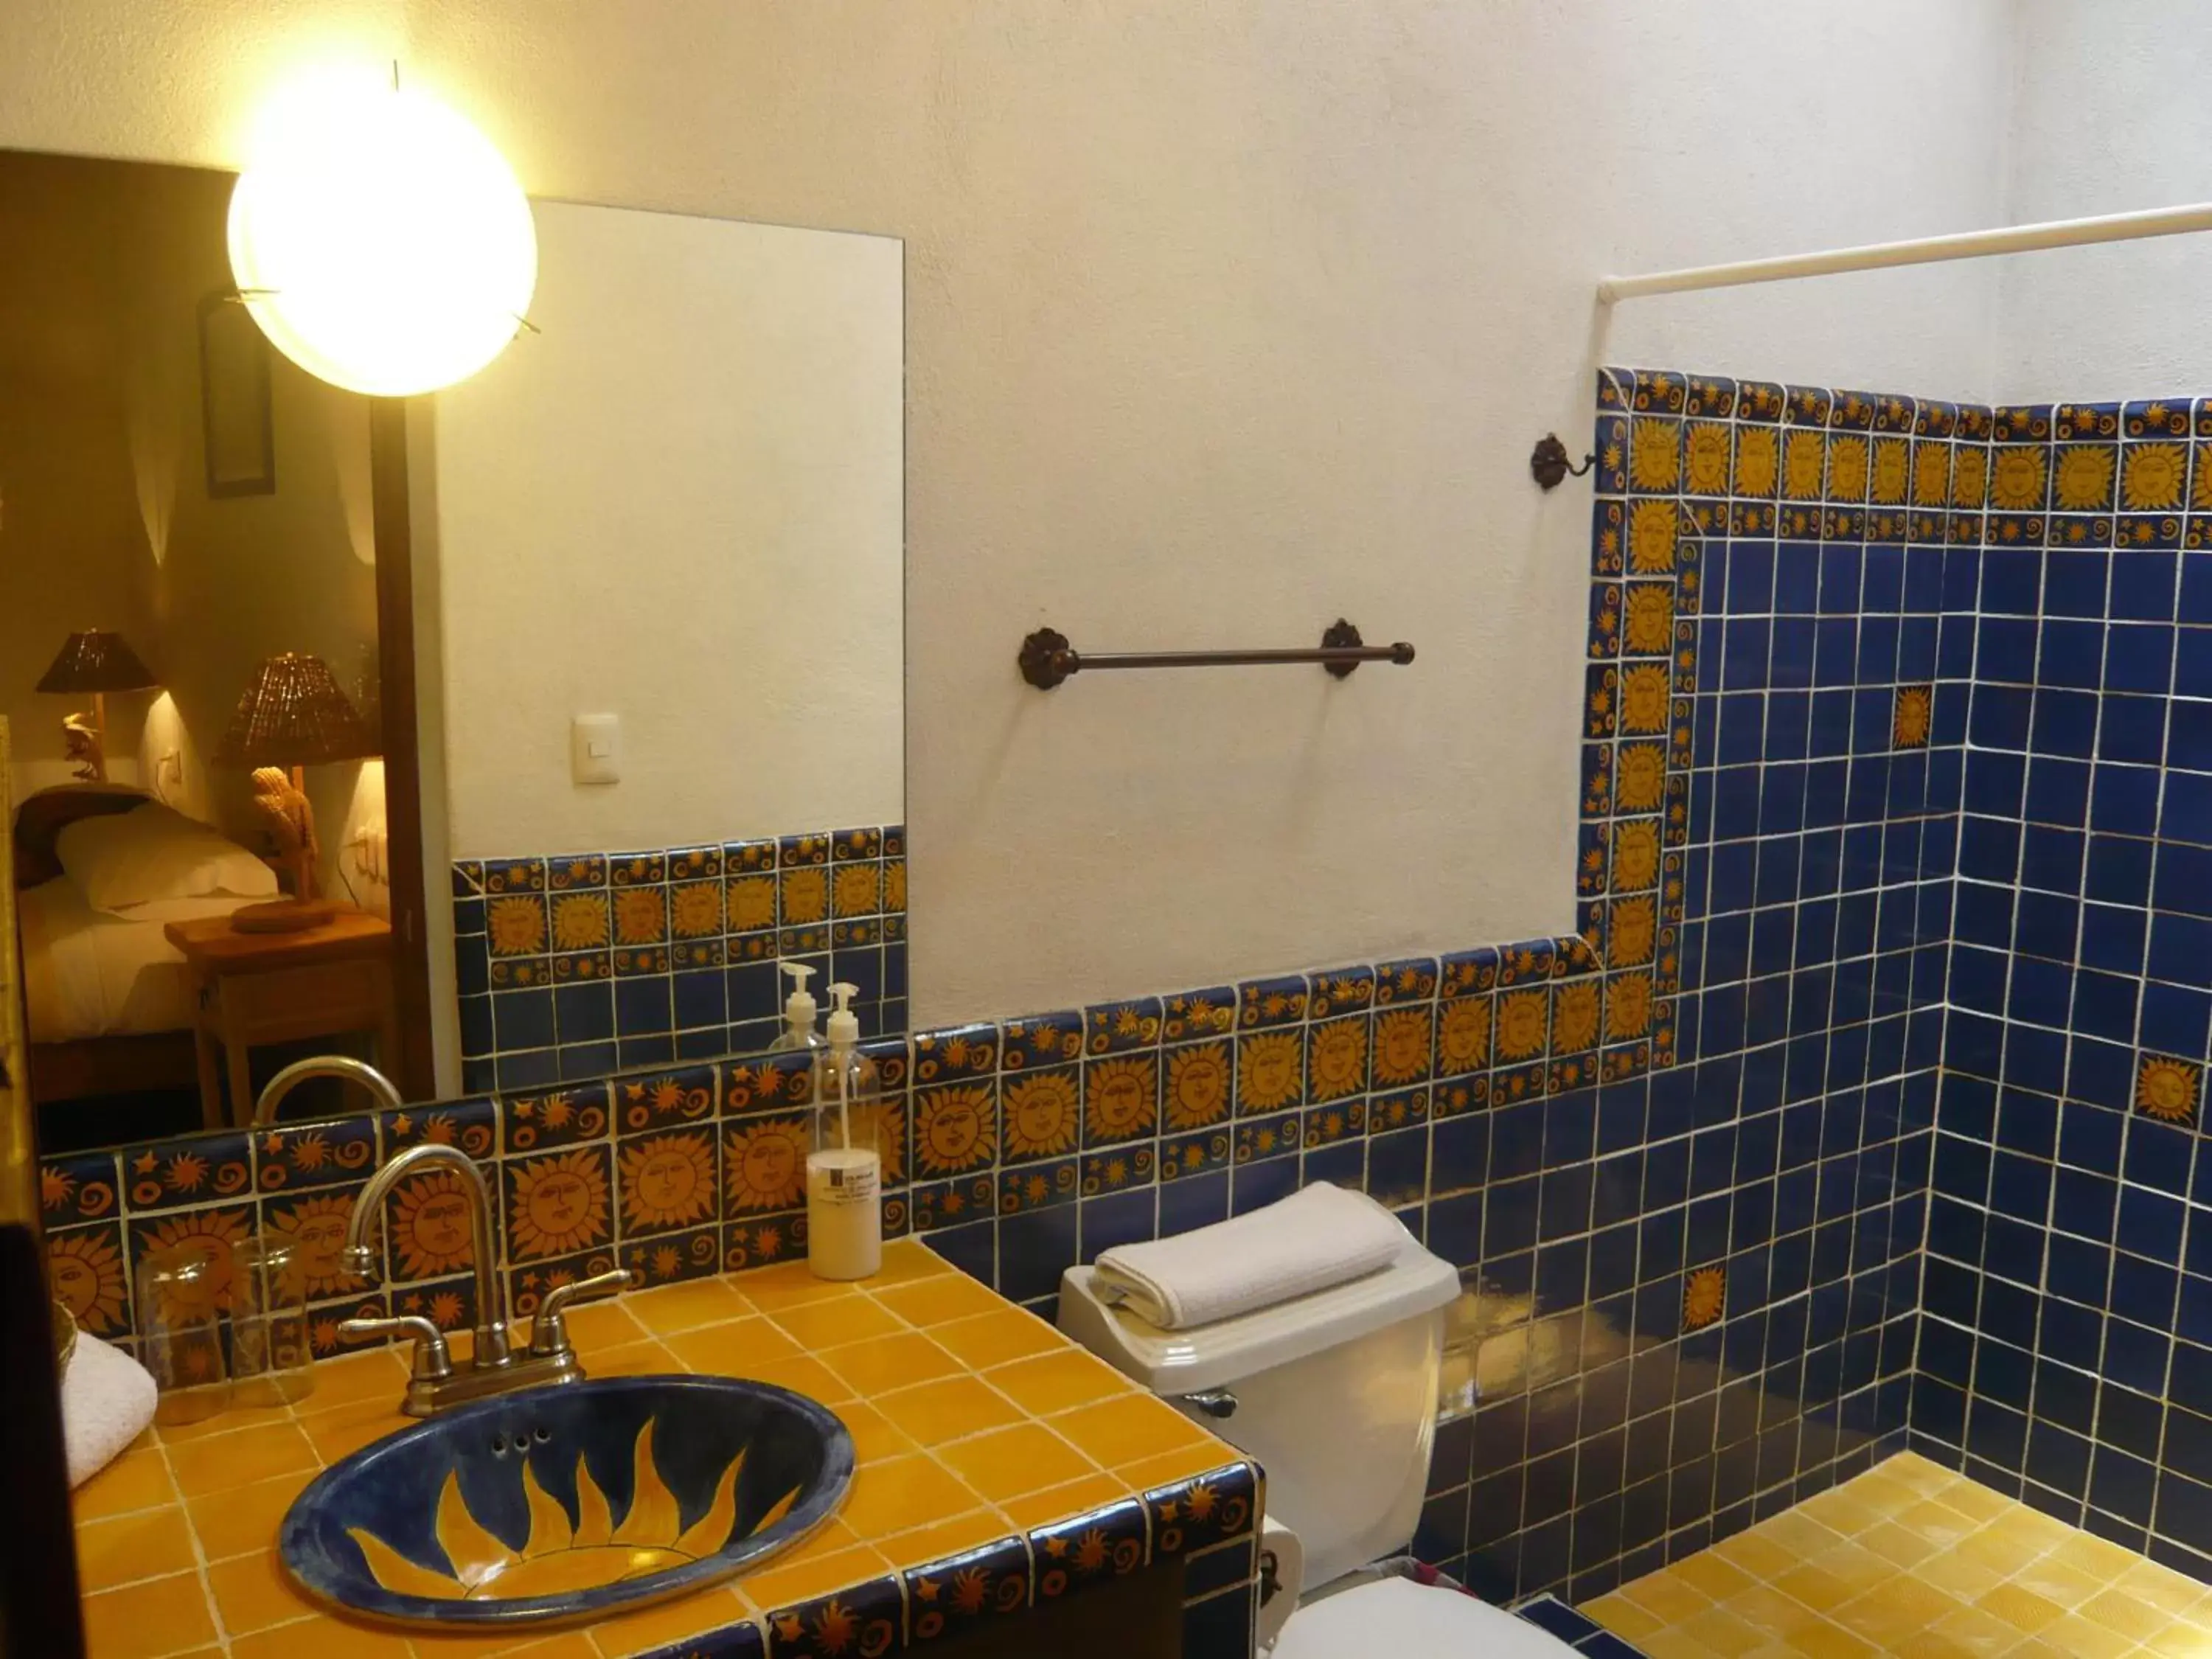 Decorative detail, Bathroom in Posada Yolihuani